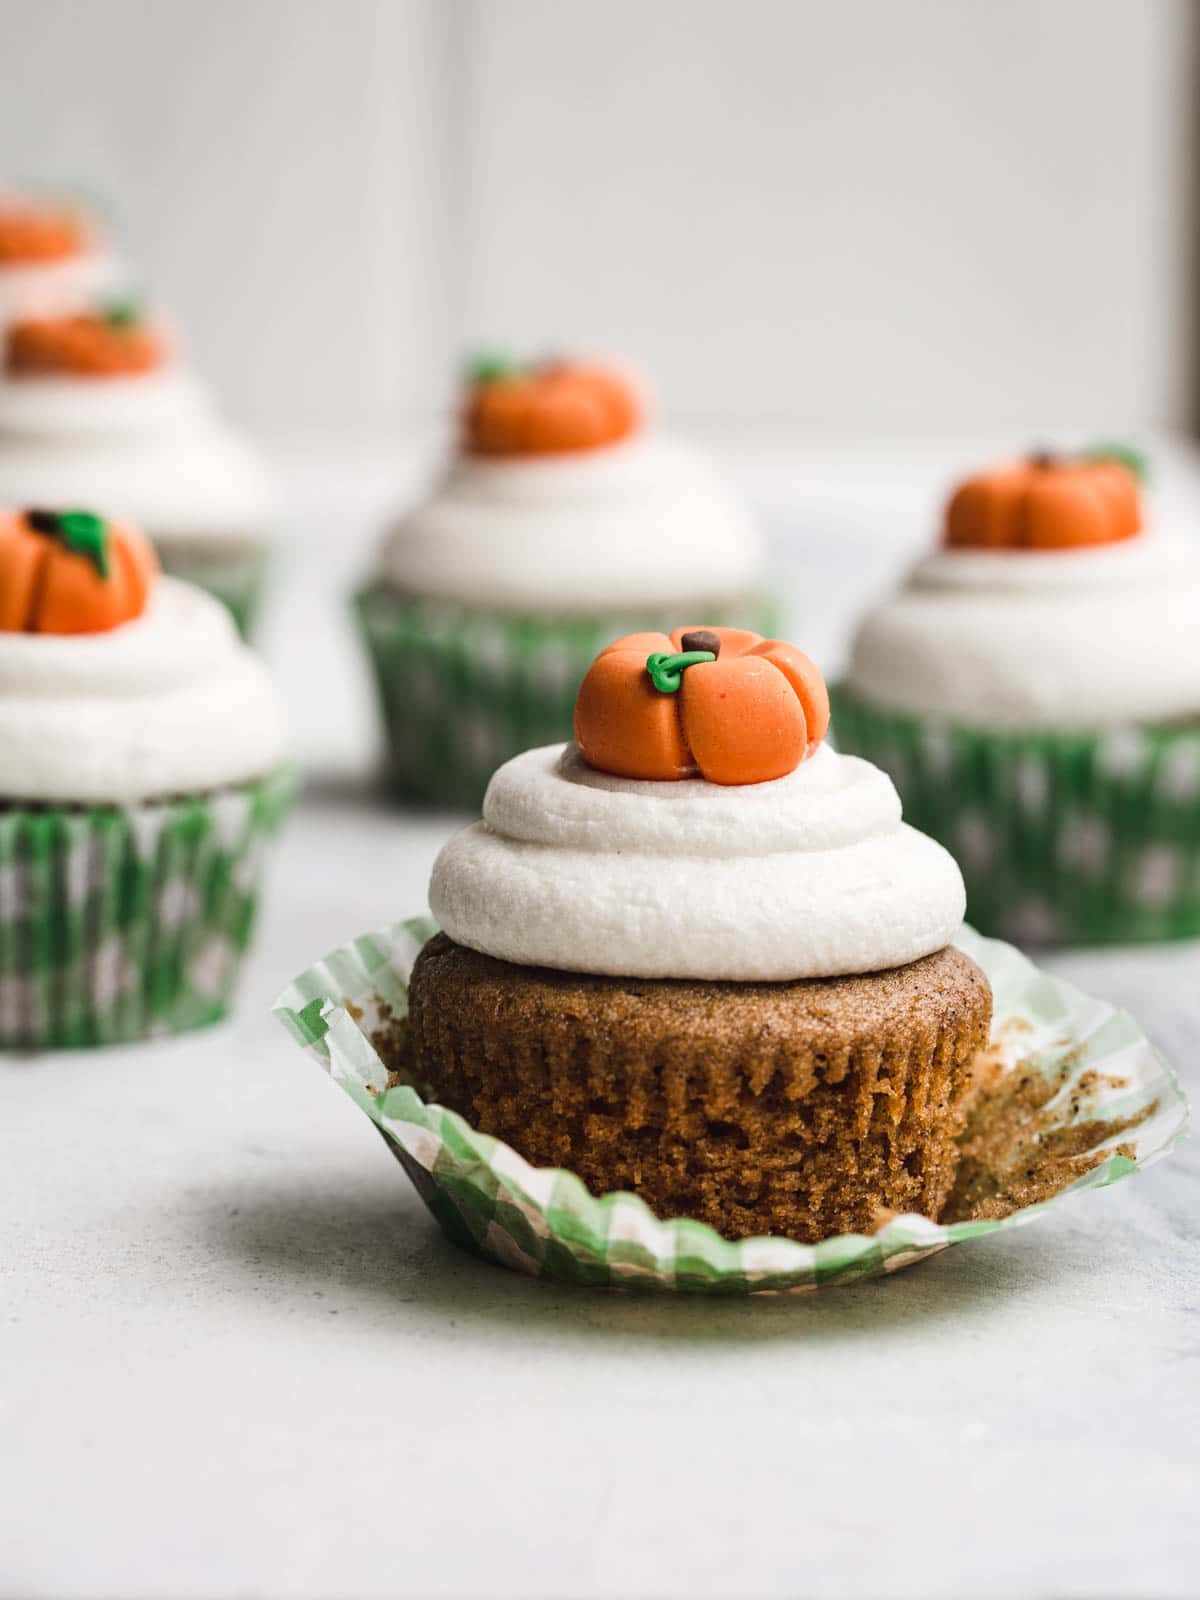 A cupcake with a pumpkin topper.